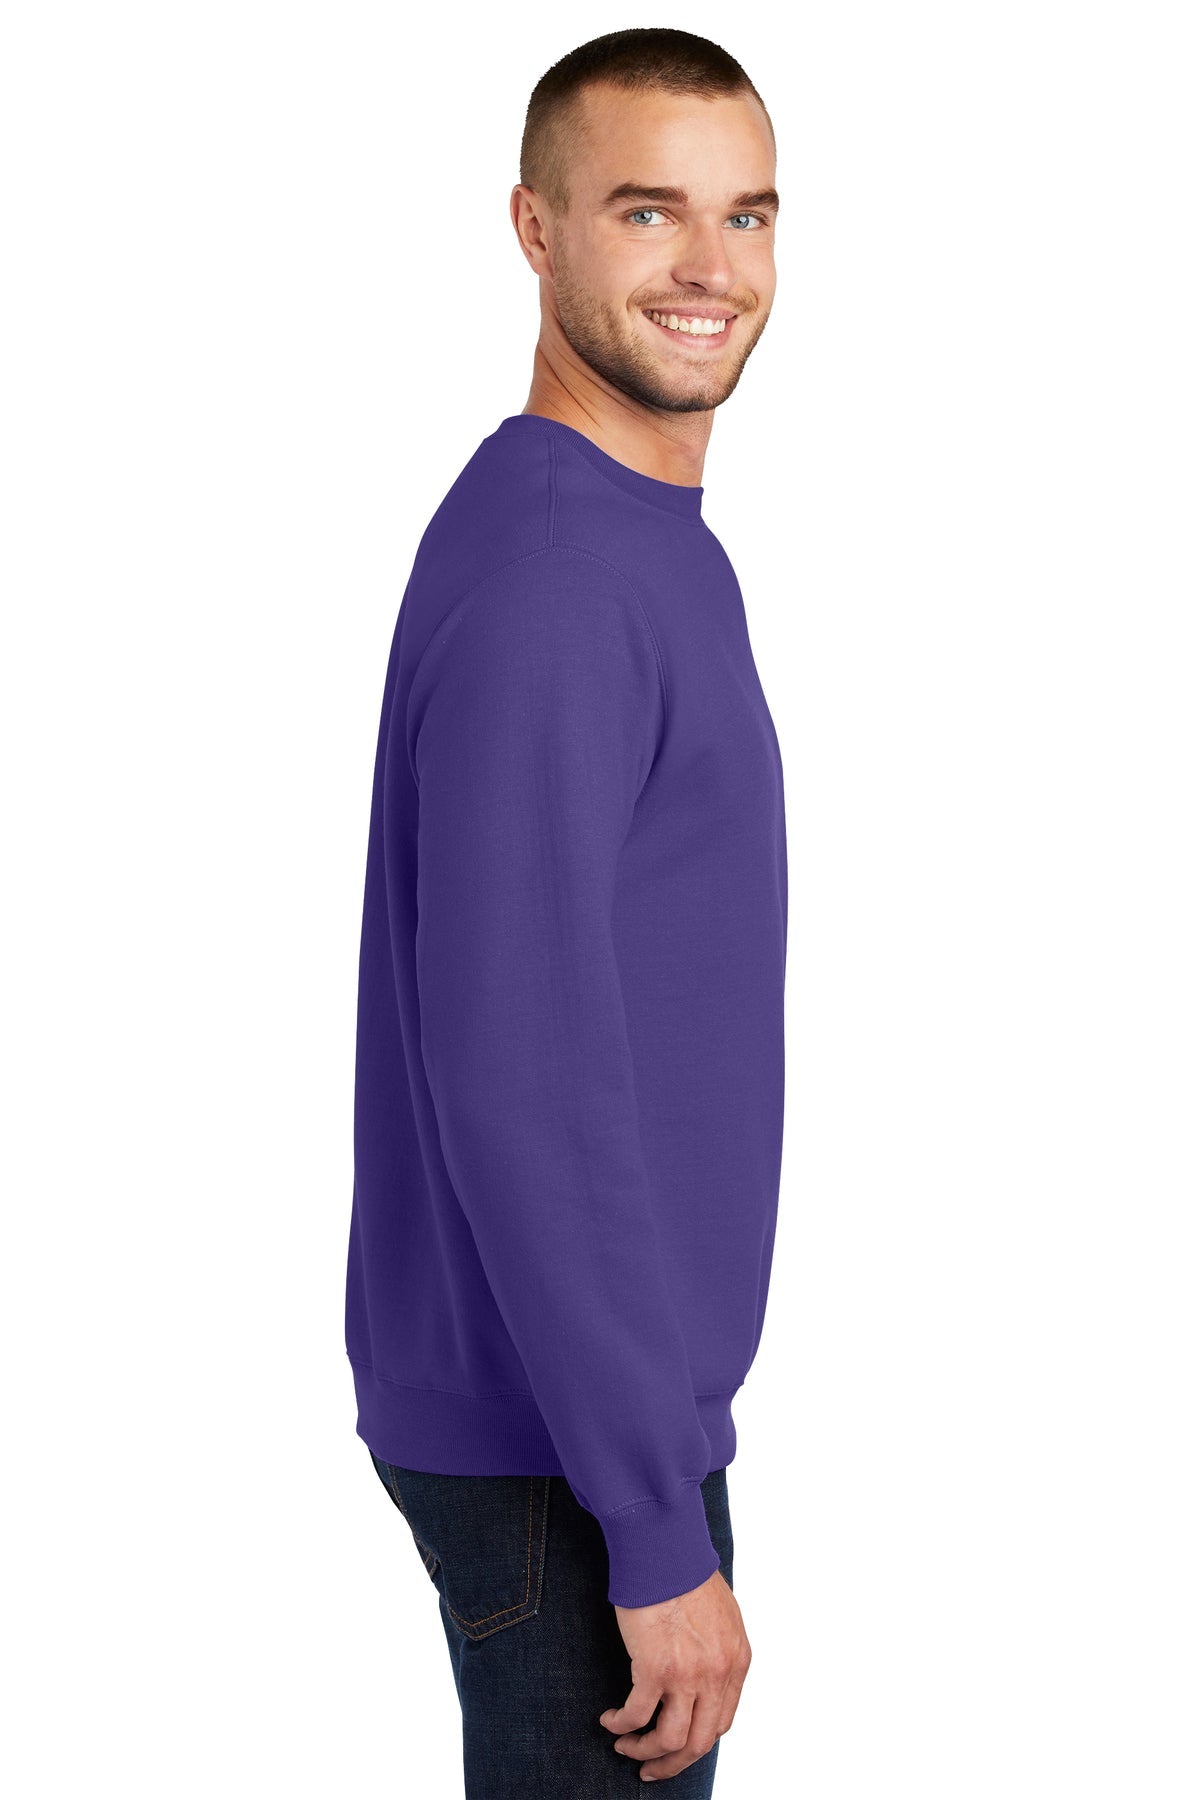 port & company_pc90 _purple_company_logo_sweatshirts